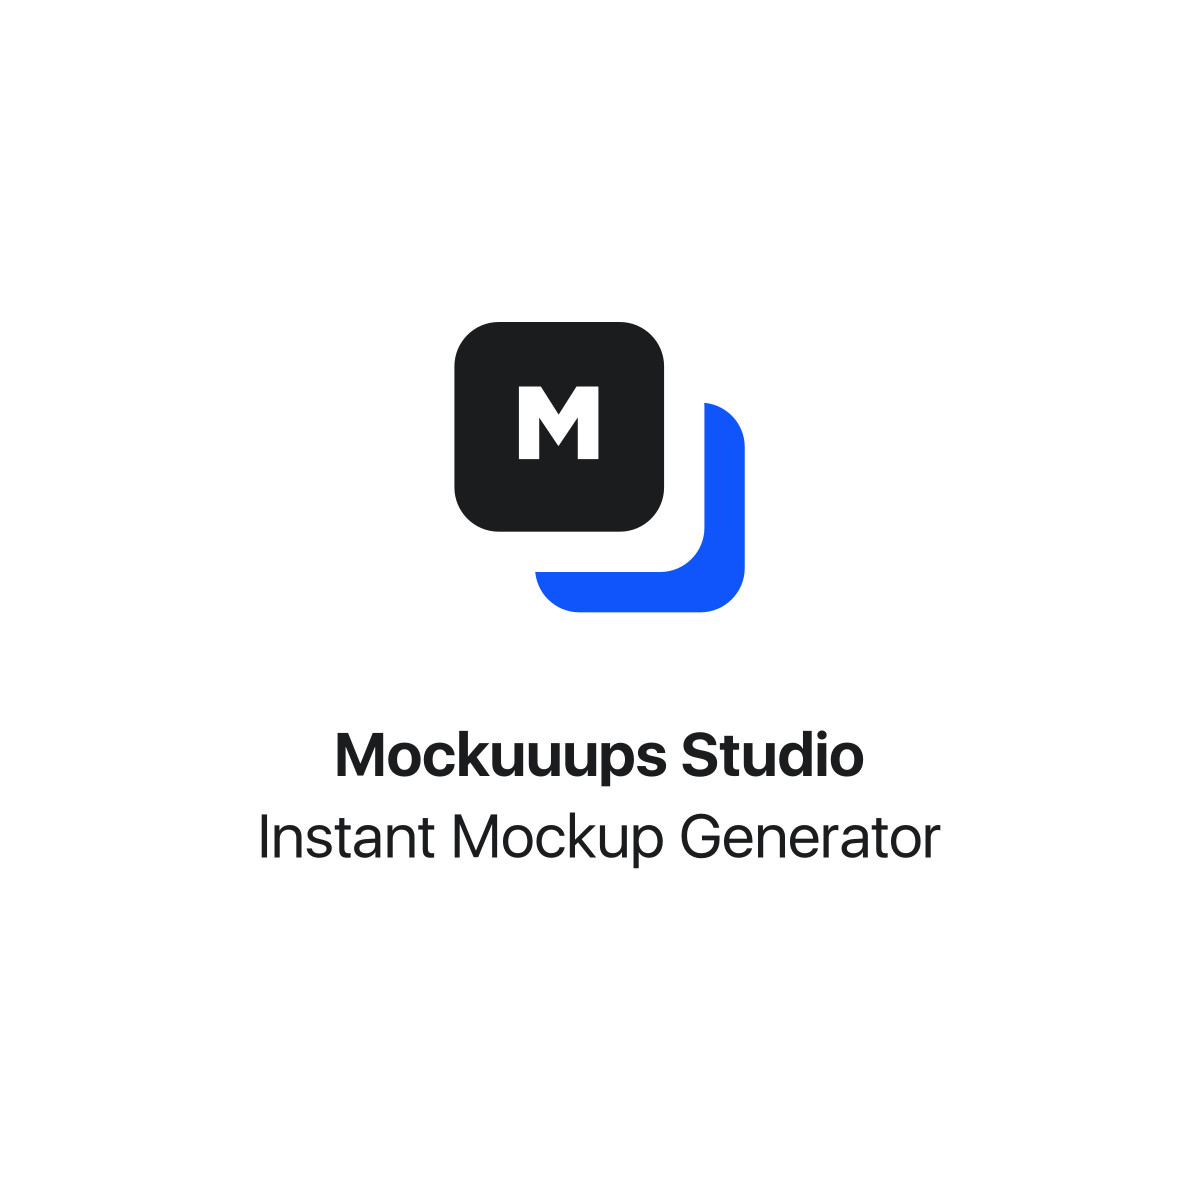 Mockup Studio